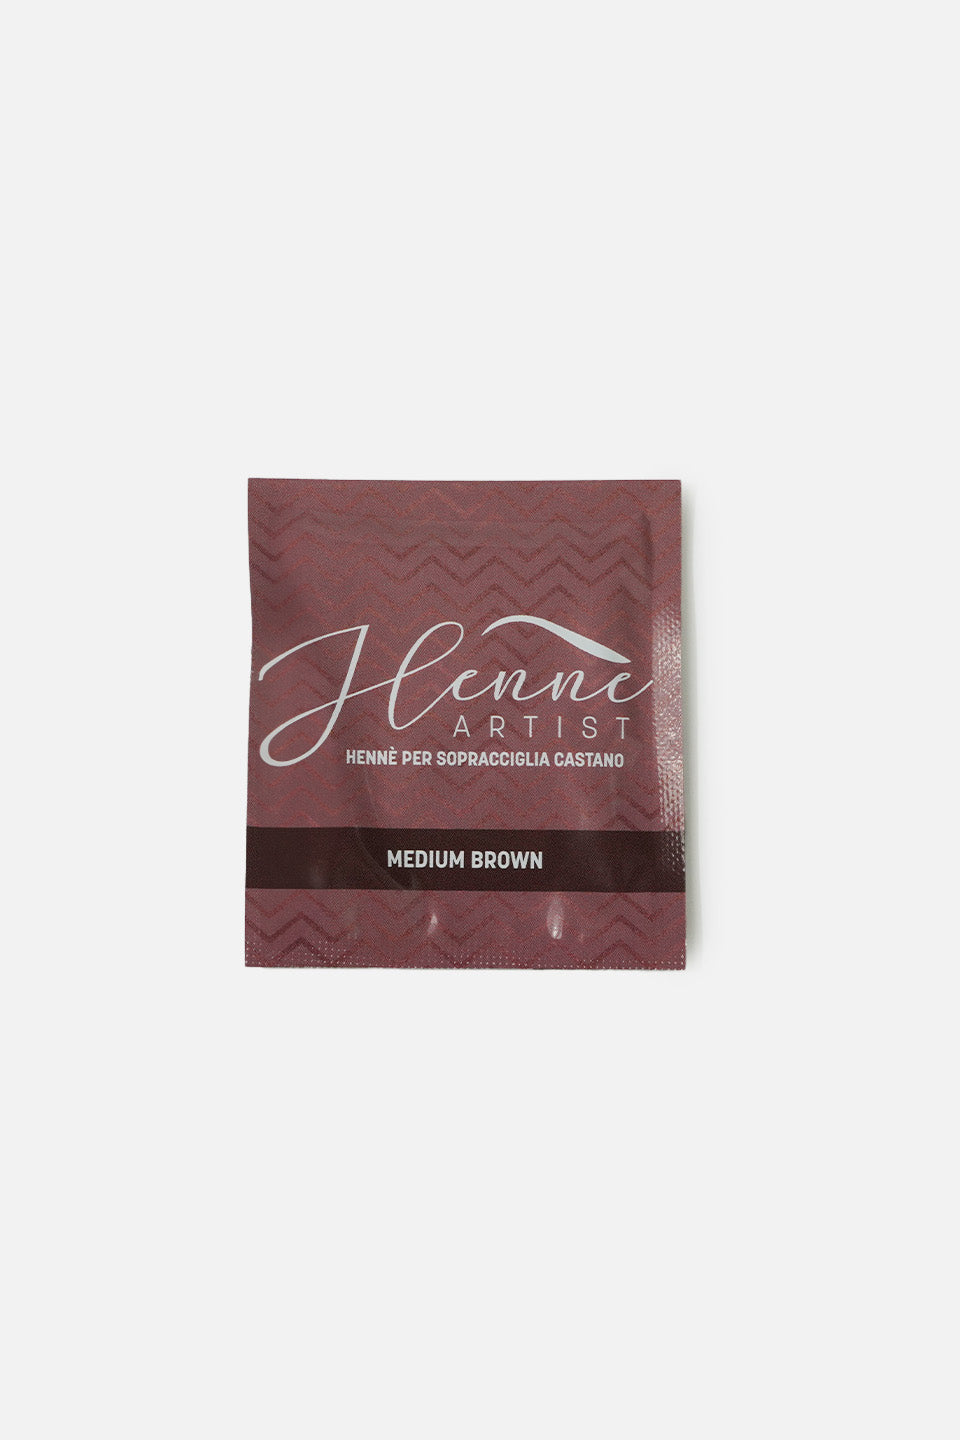 Kit completo de henna para cejas - HENNÈ ARTIST